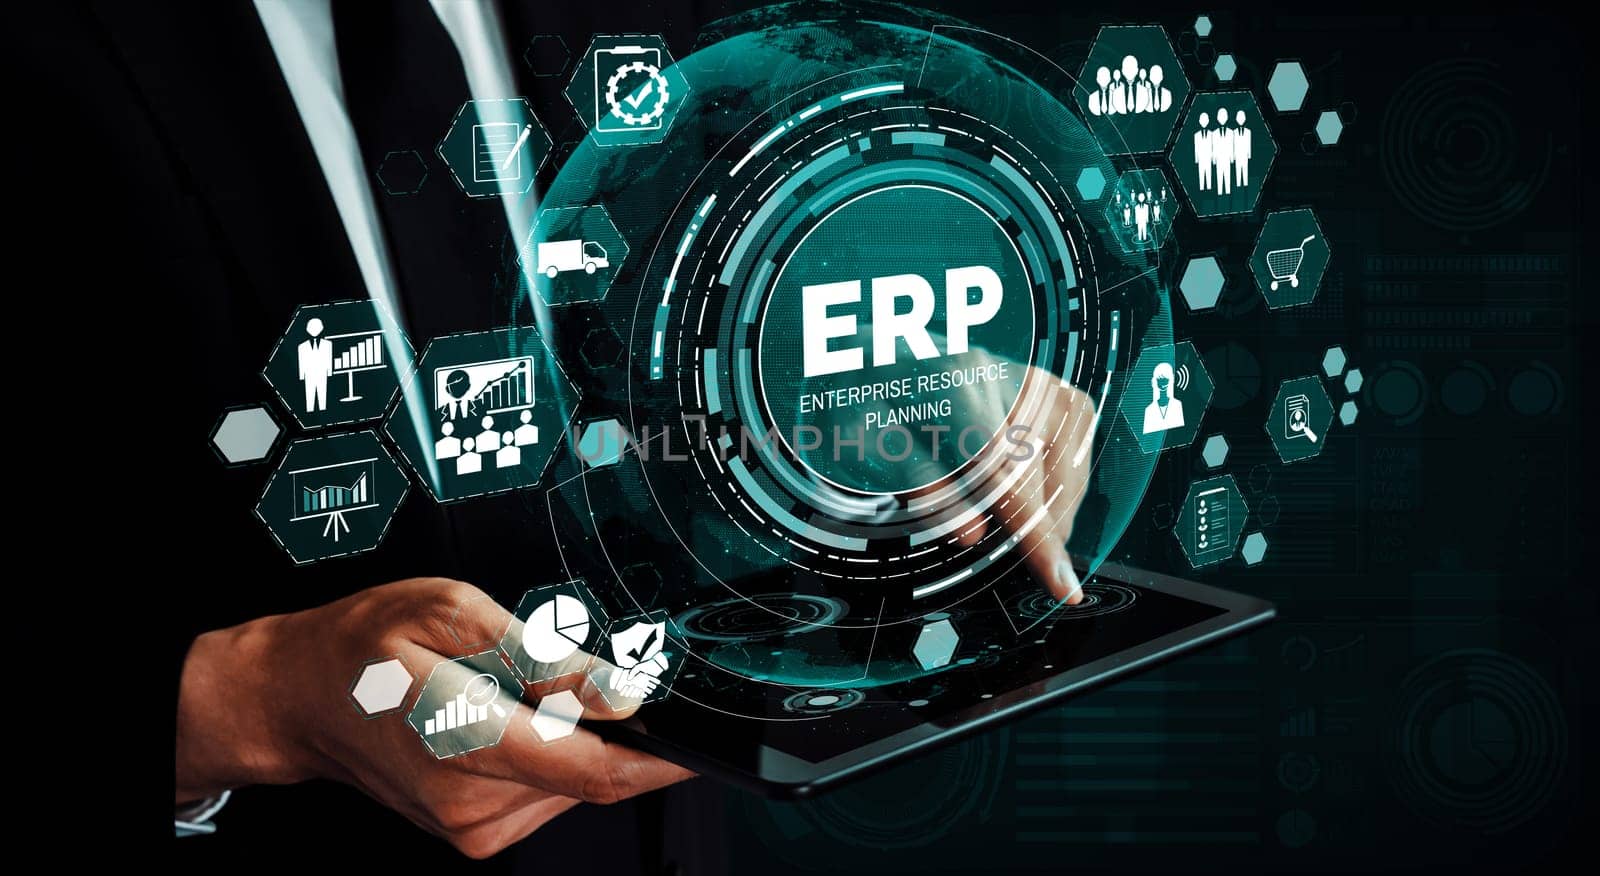 Enterprise Resource Management ERP software system for business resources uds by biancoblue